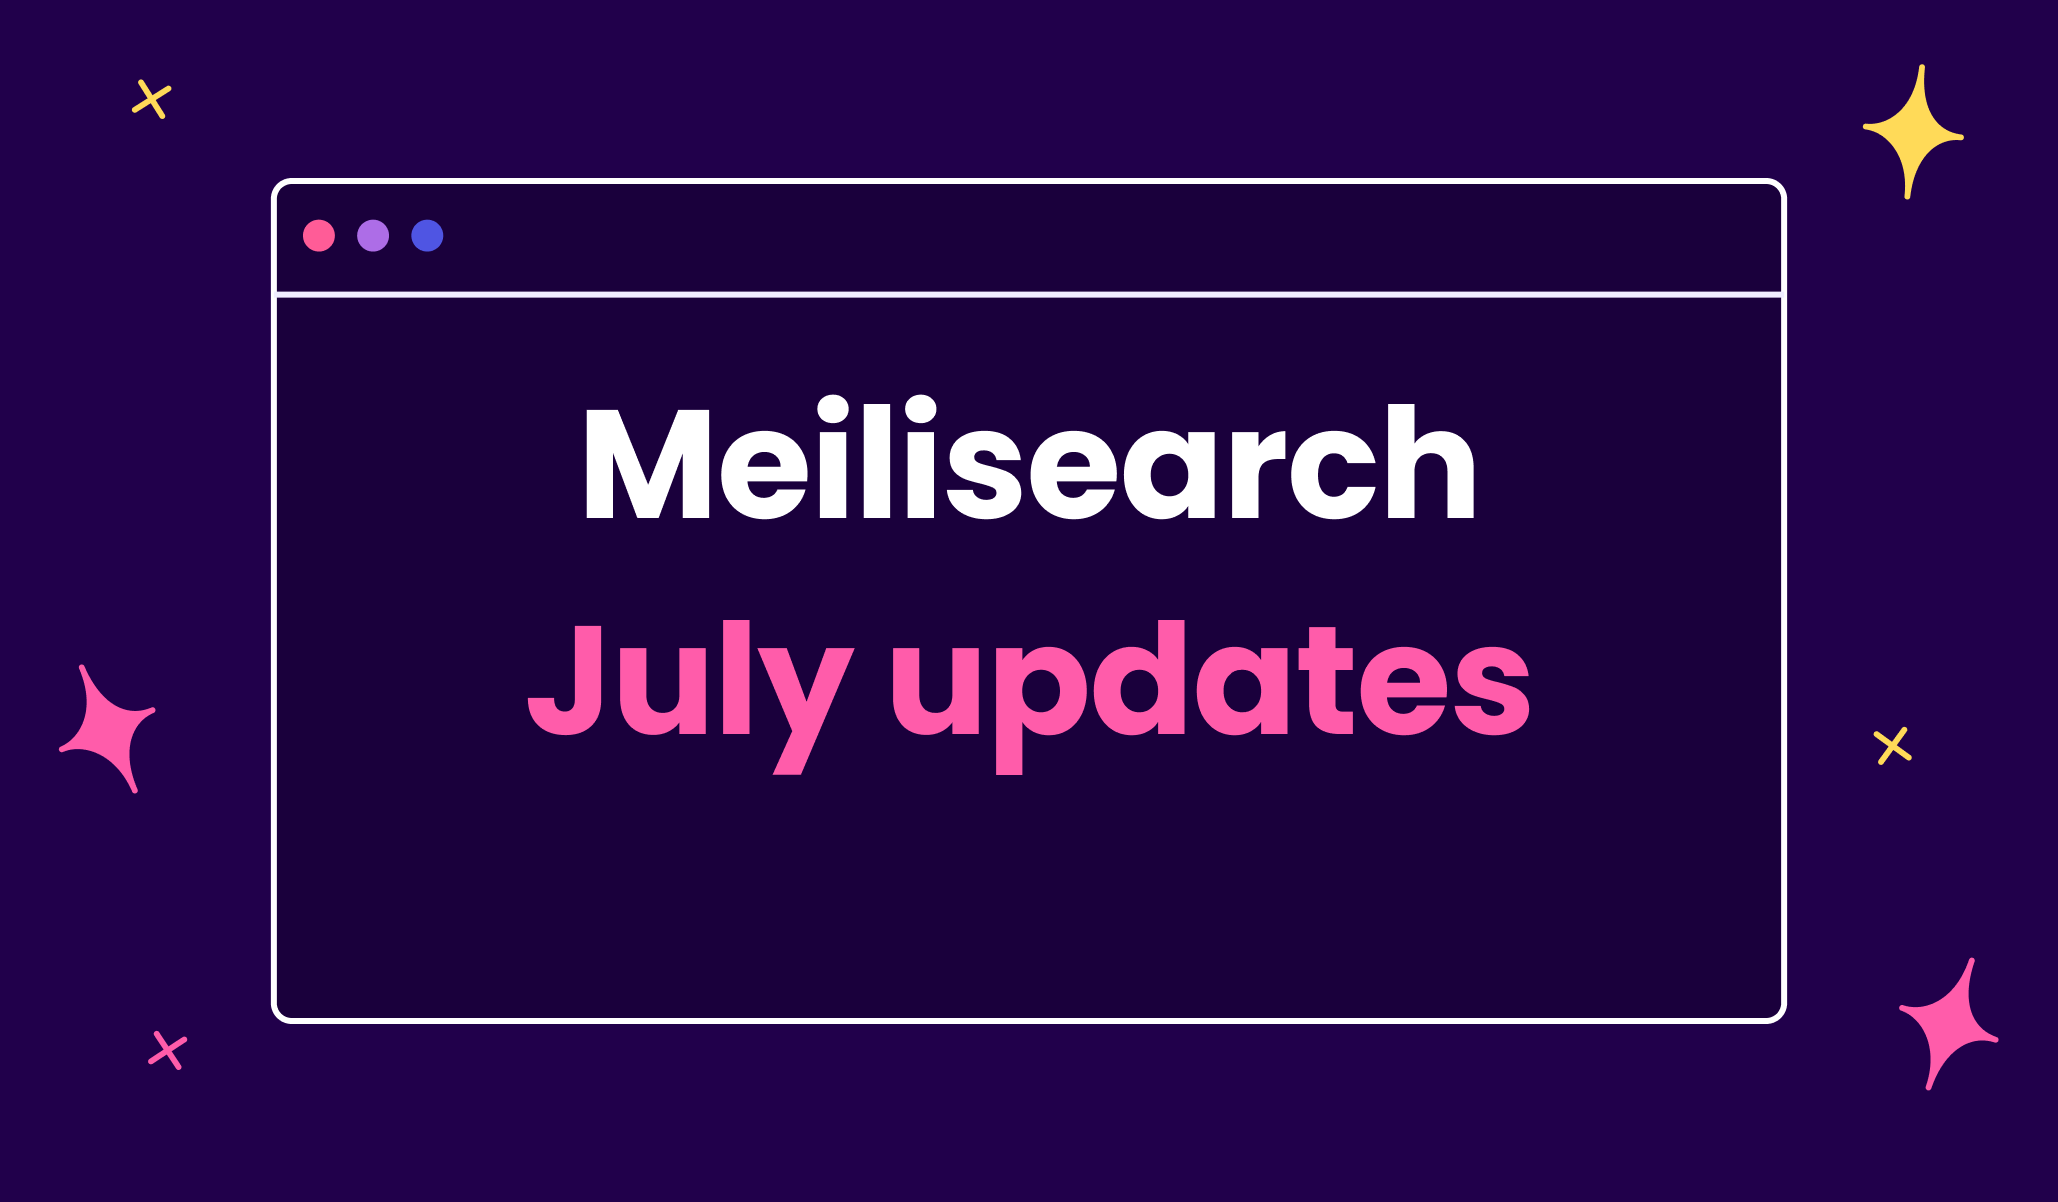 Meilisearch July updates